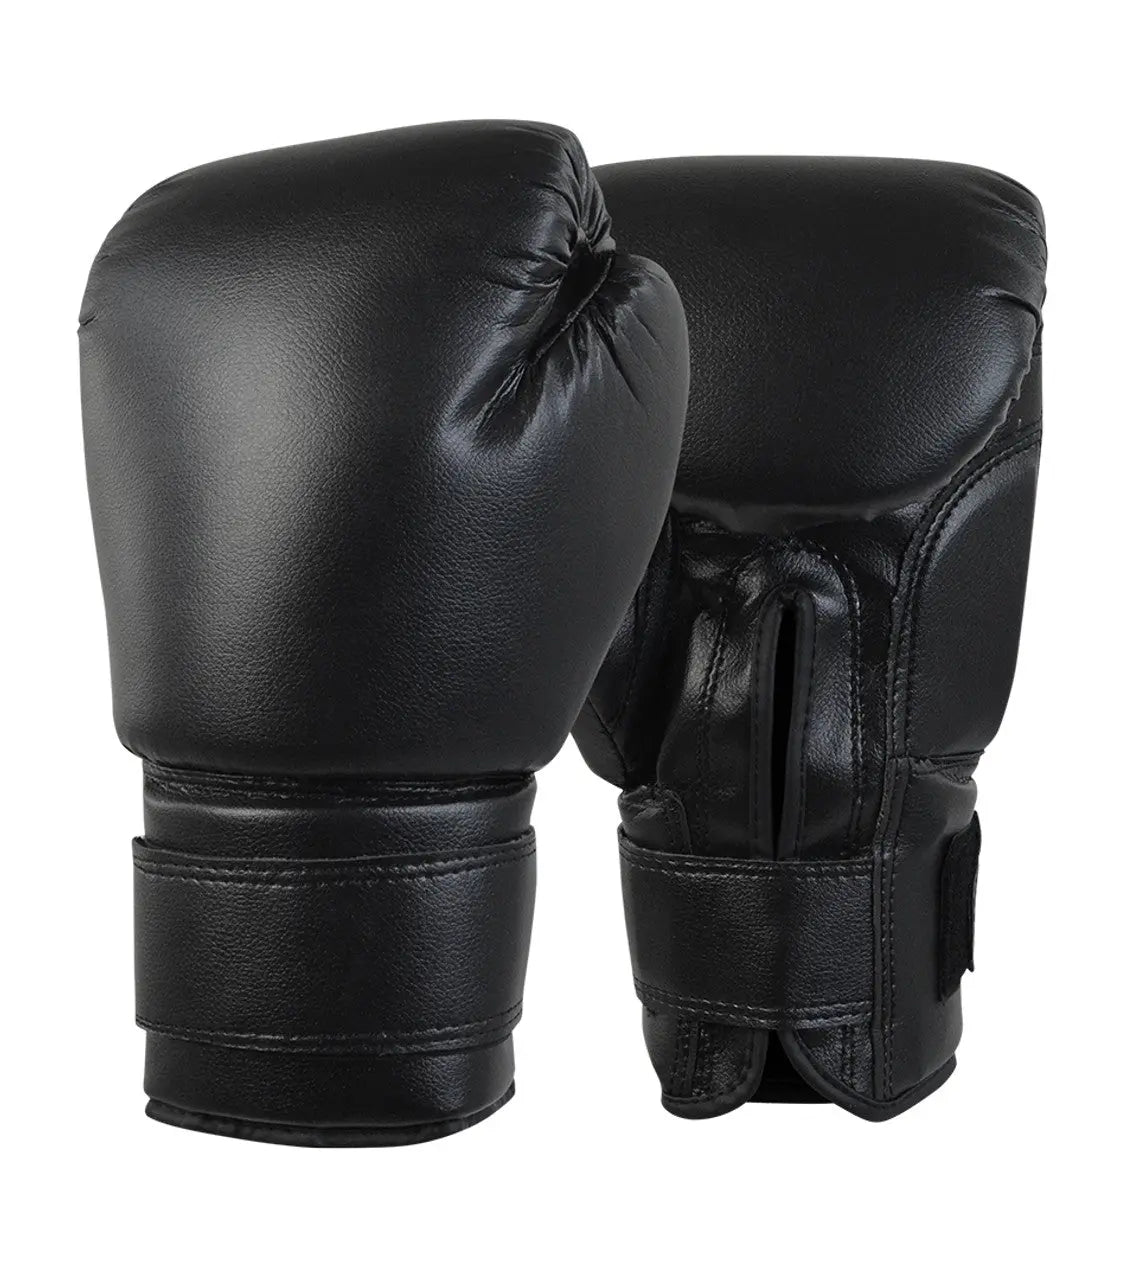 Recruit No Logo Boxing Gloves | Black - Prime combats COMBAT CORNER  Training Gloves